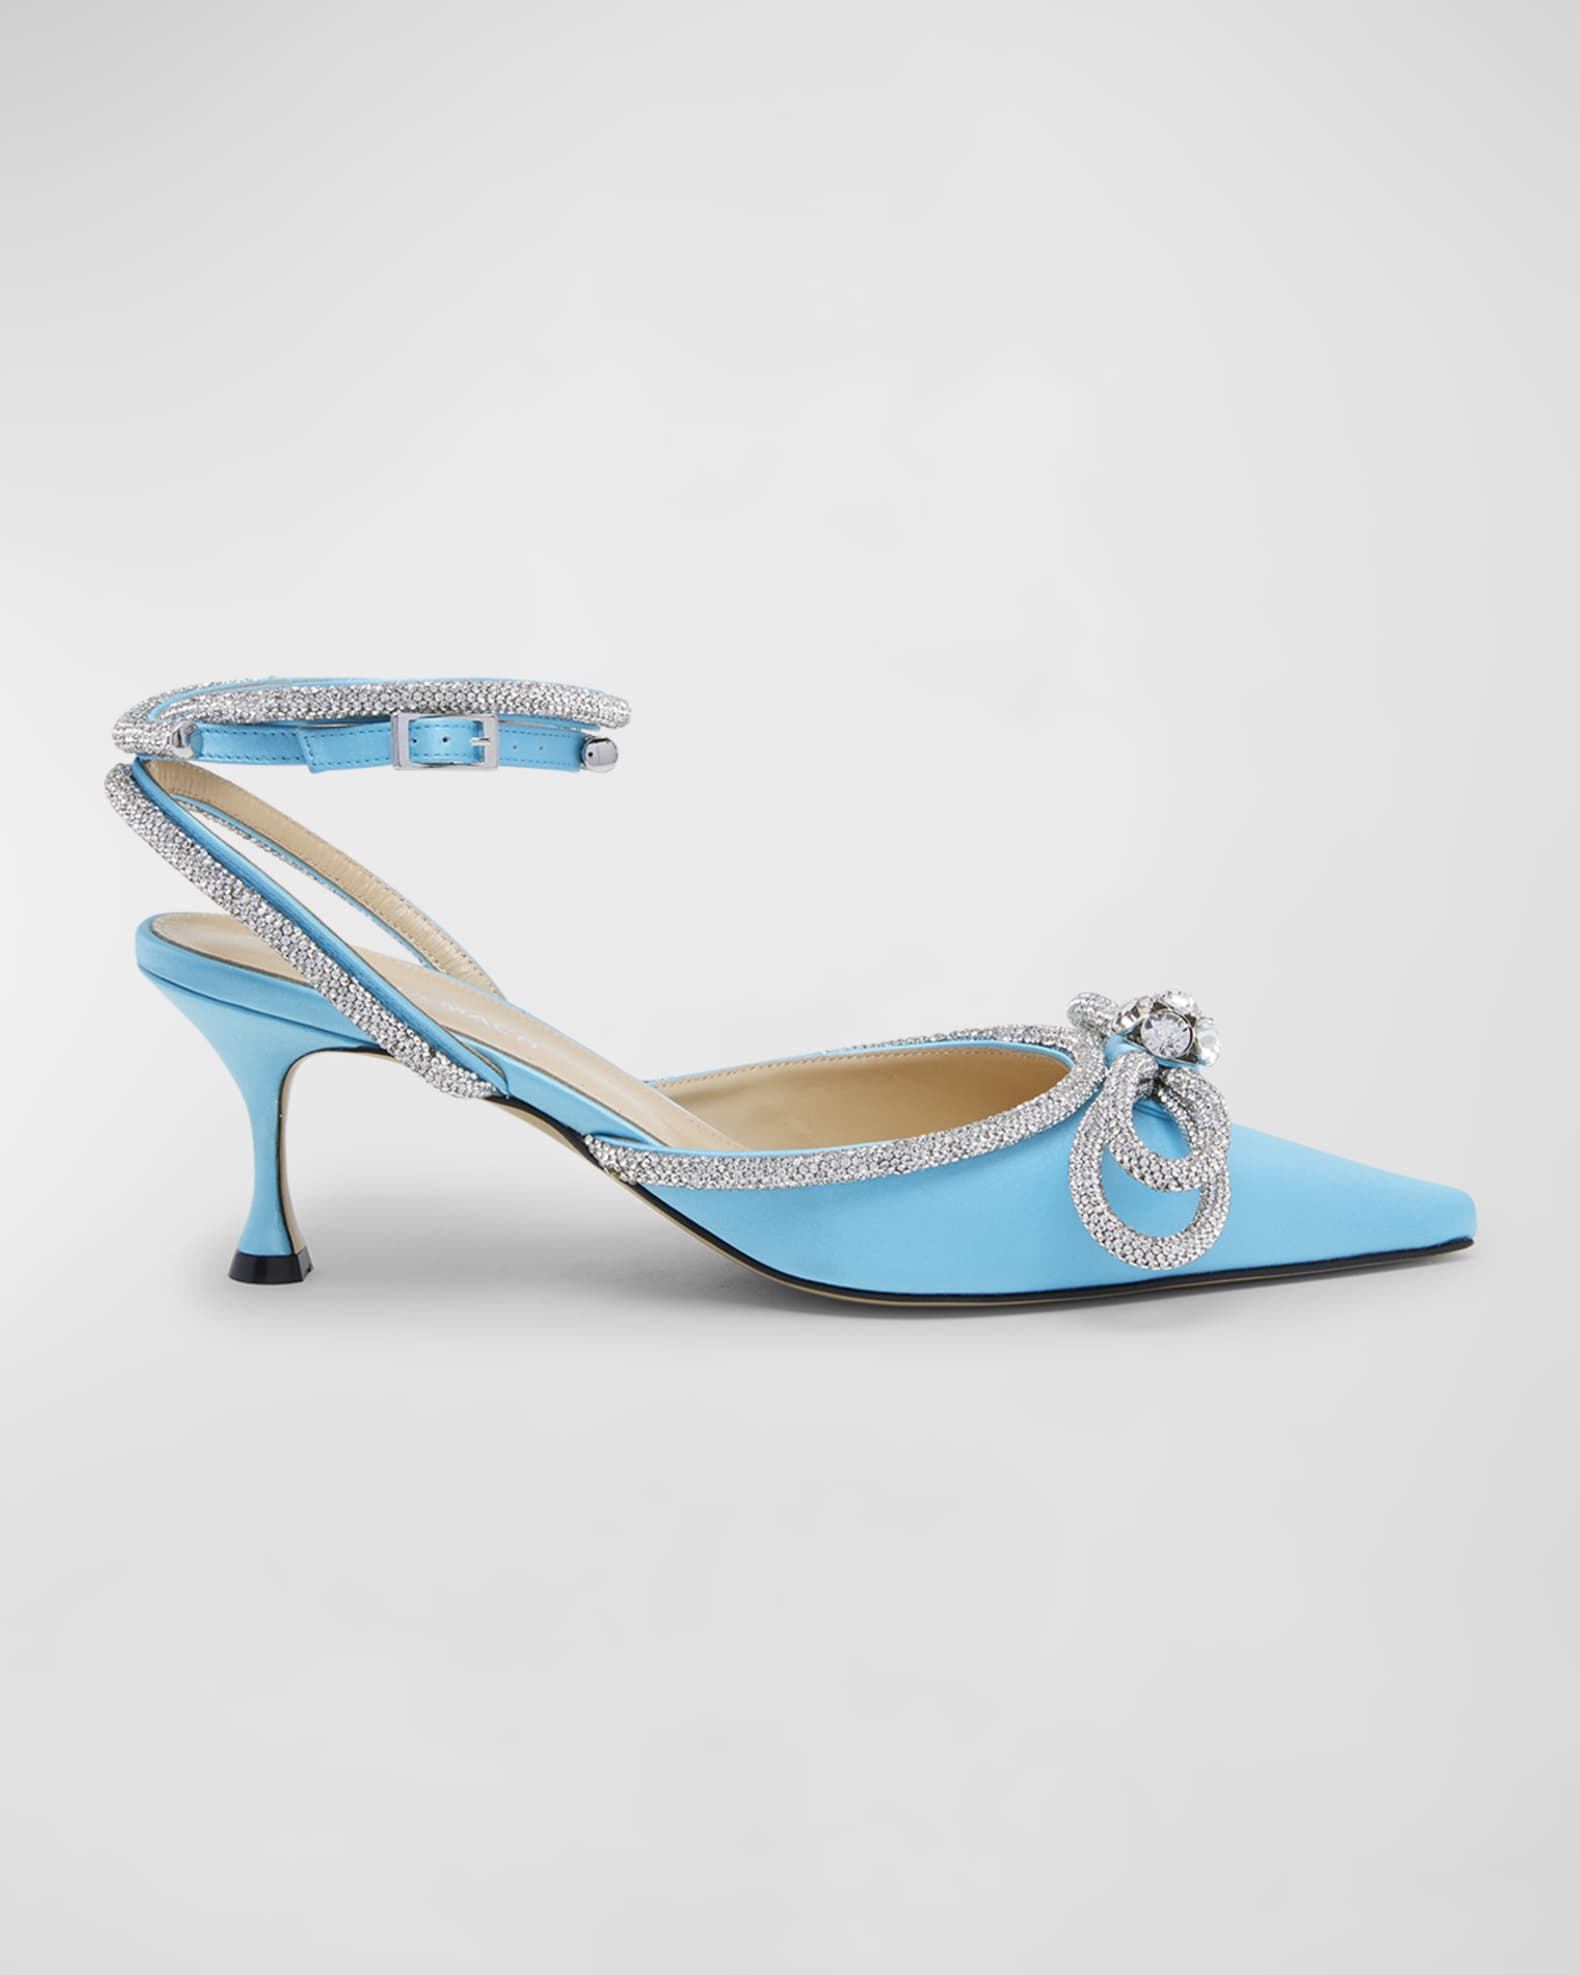 Blue Christian Louboutin Bow-Embellished Heels